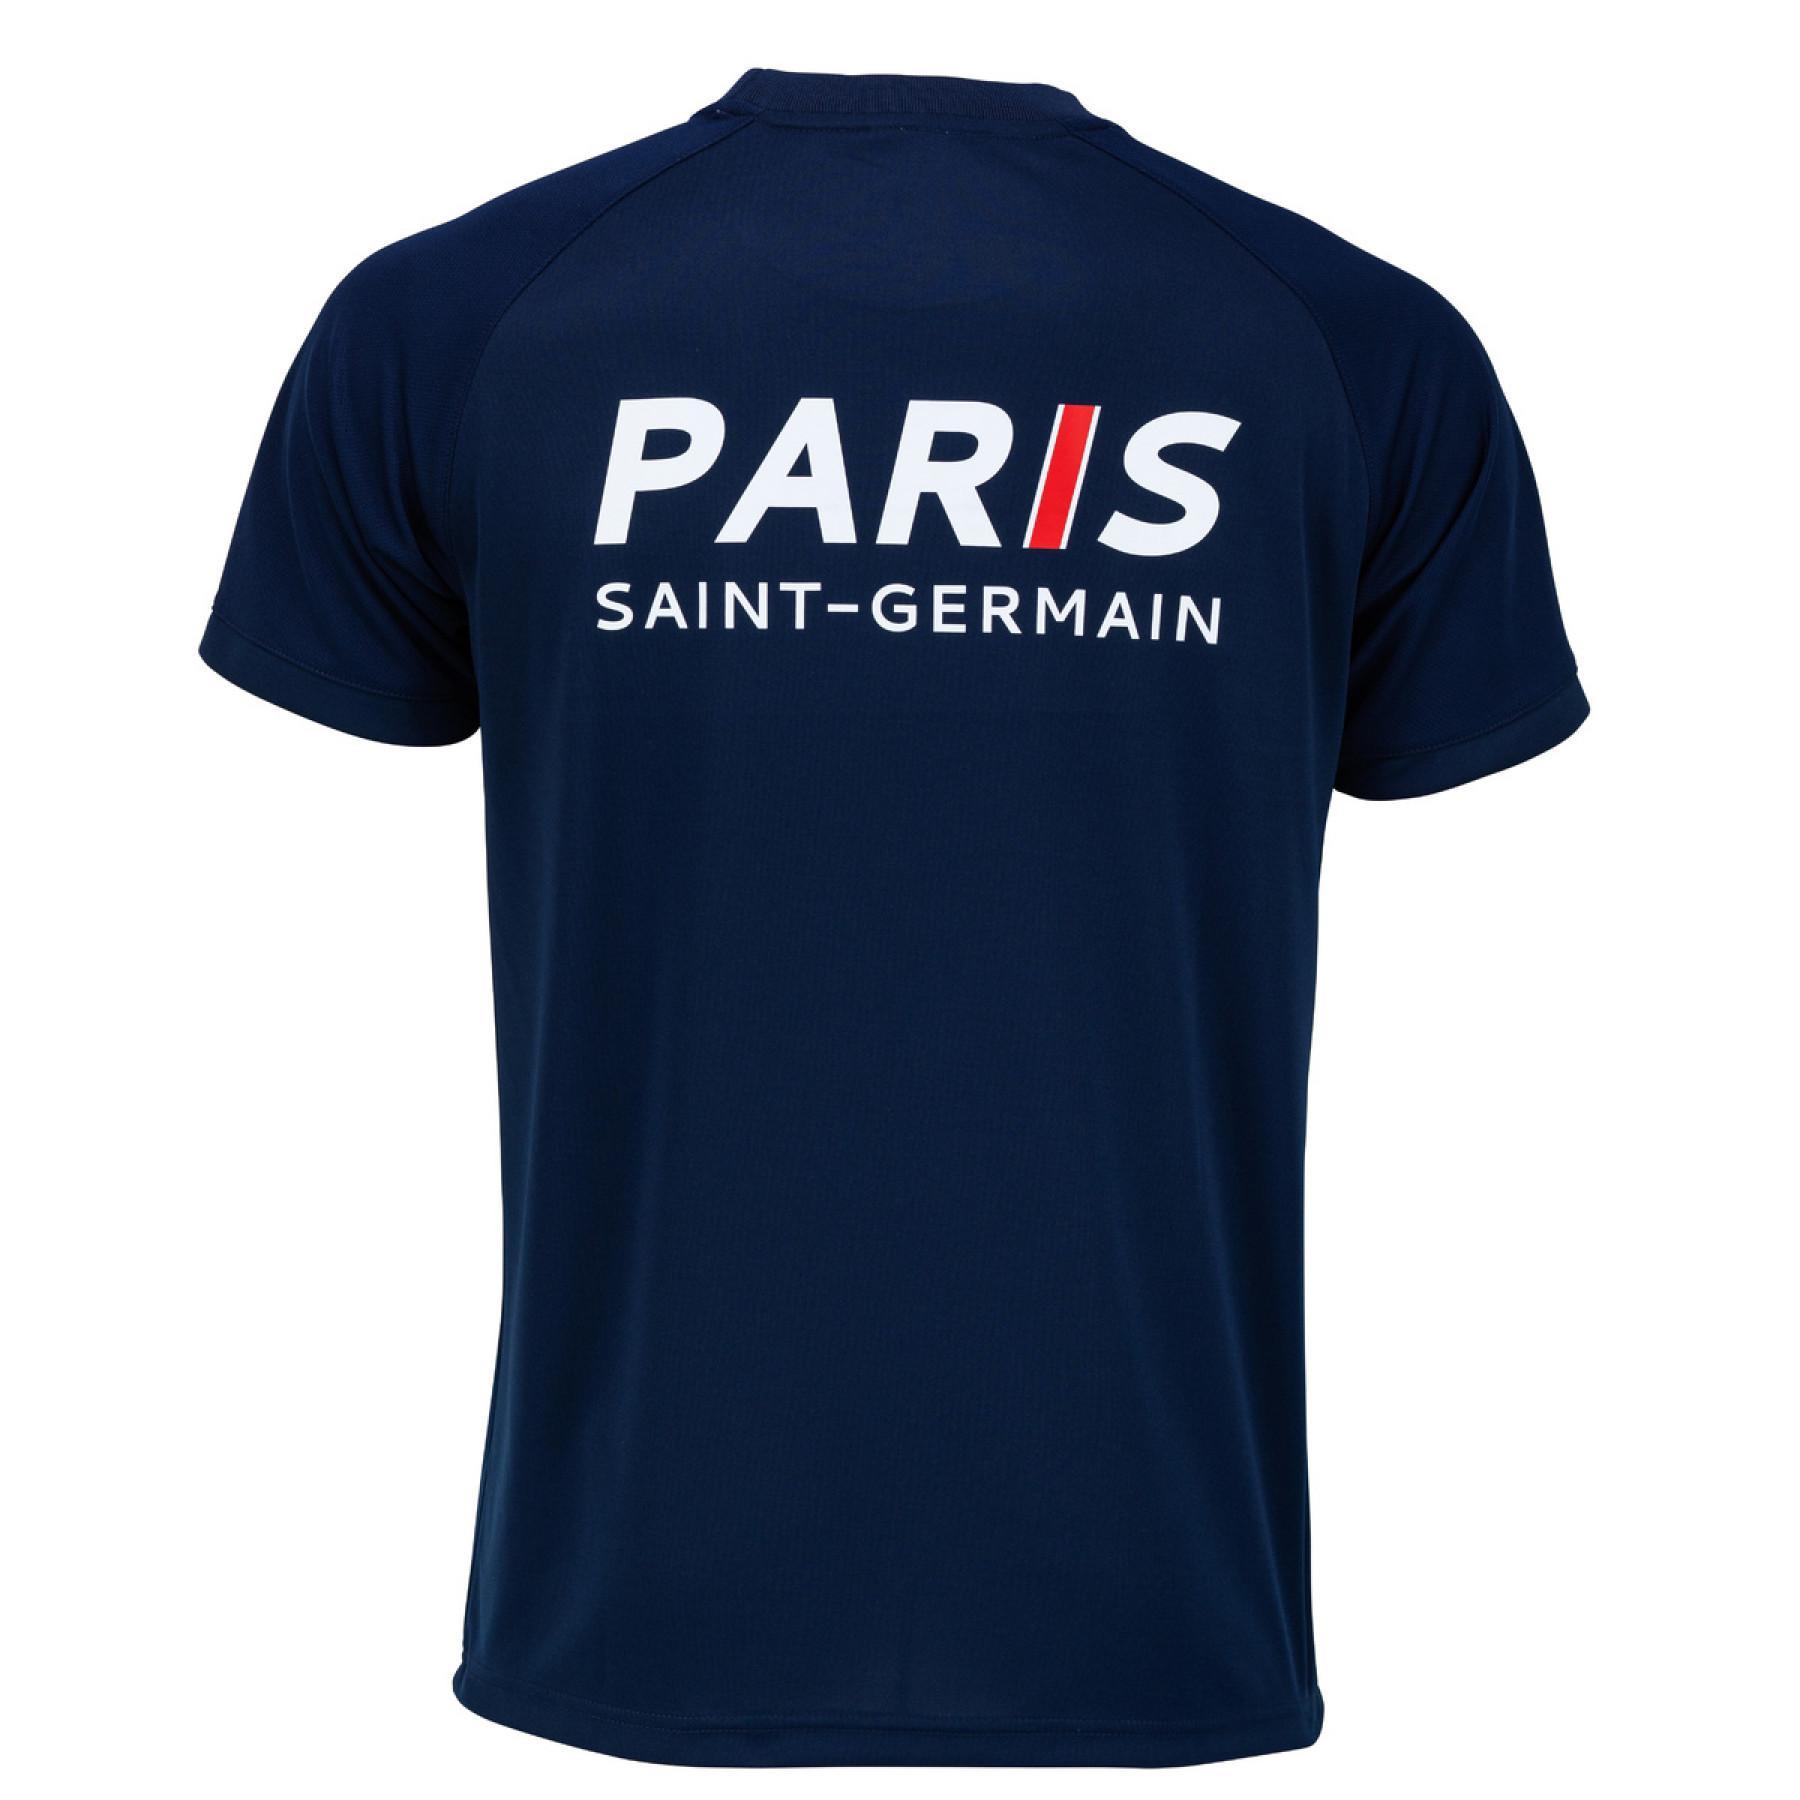 T-shirt paris saint germain Weeplay